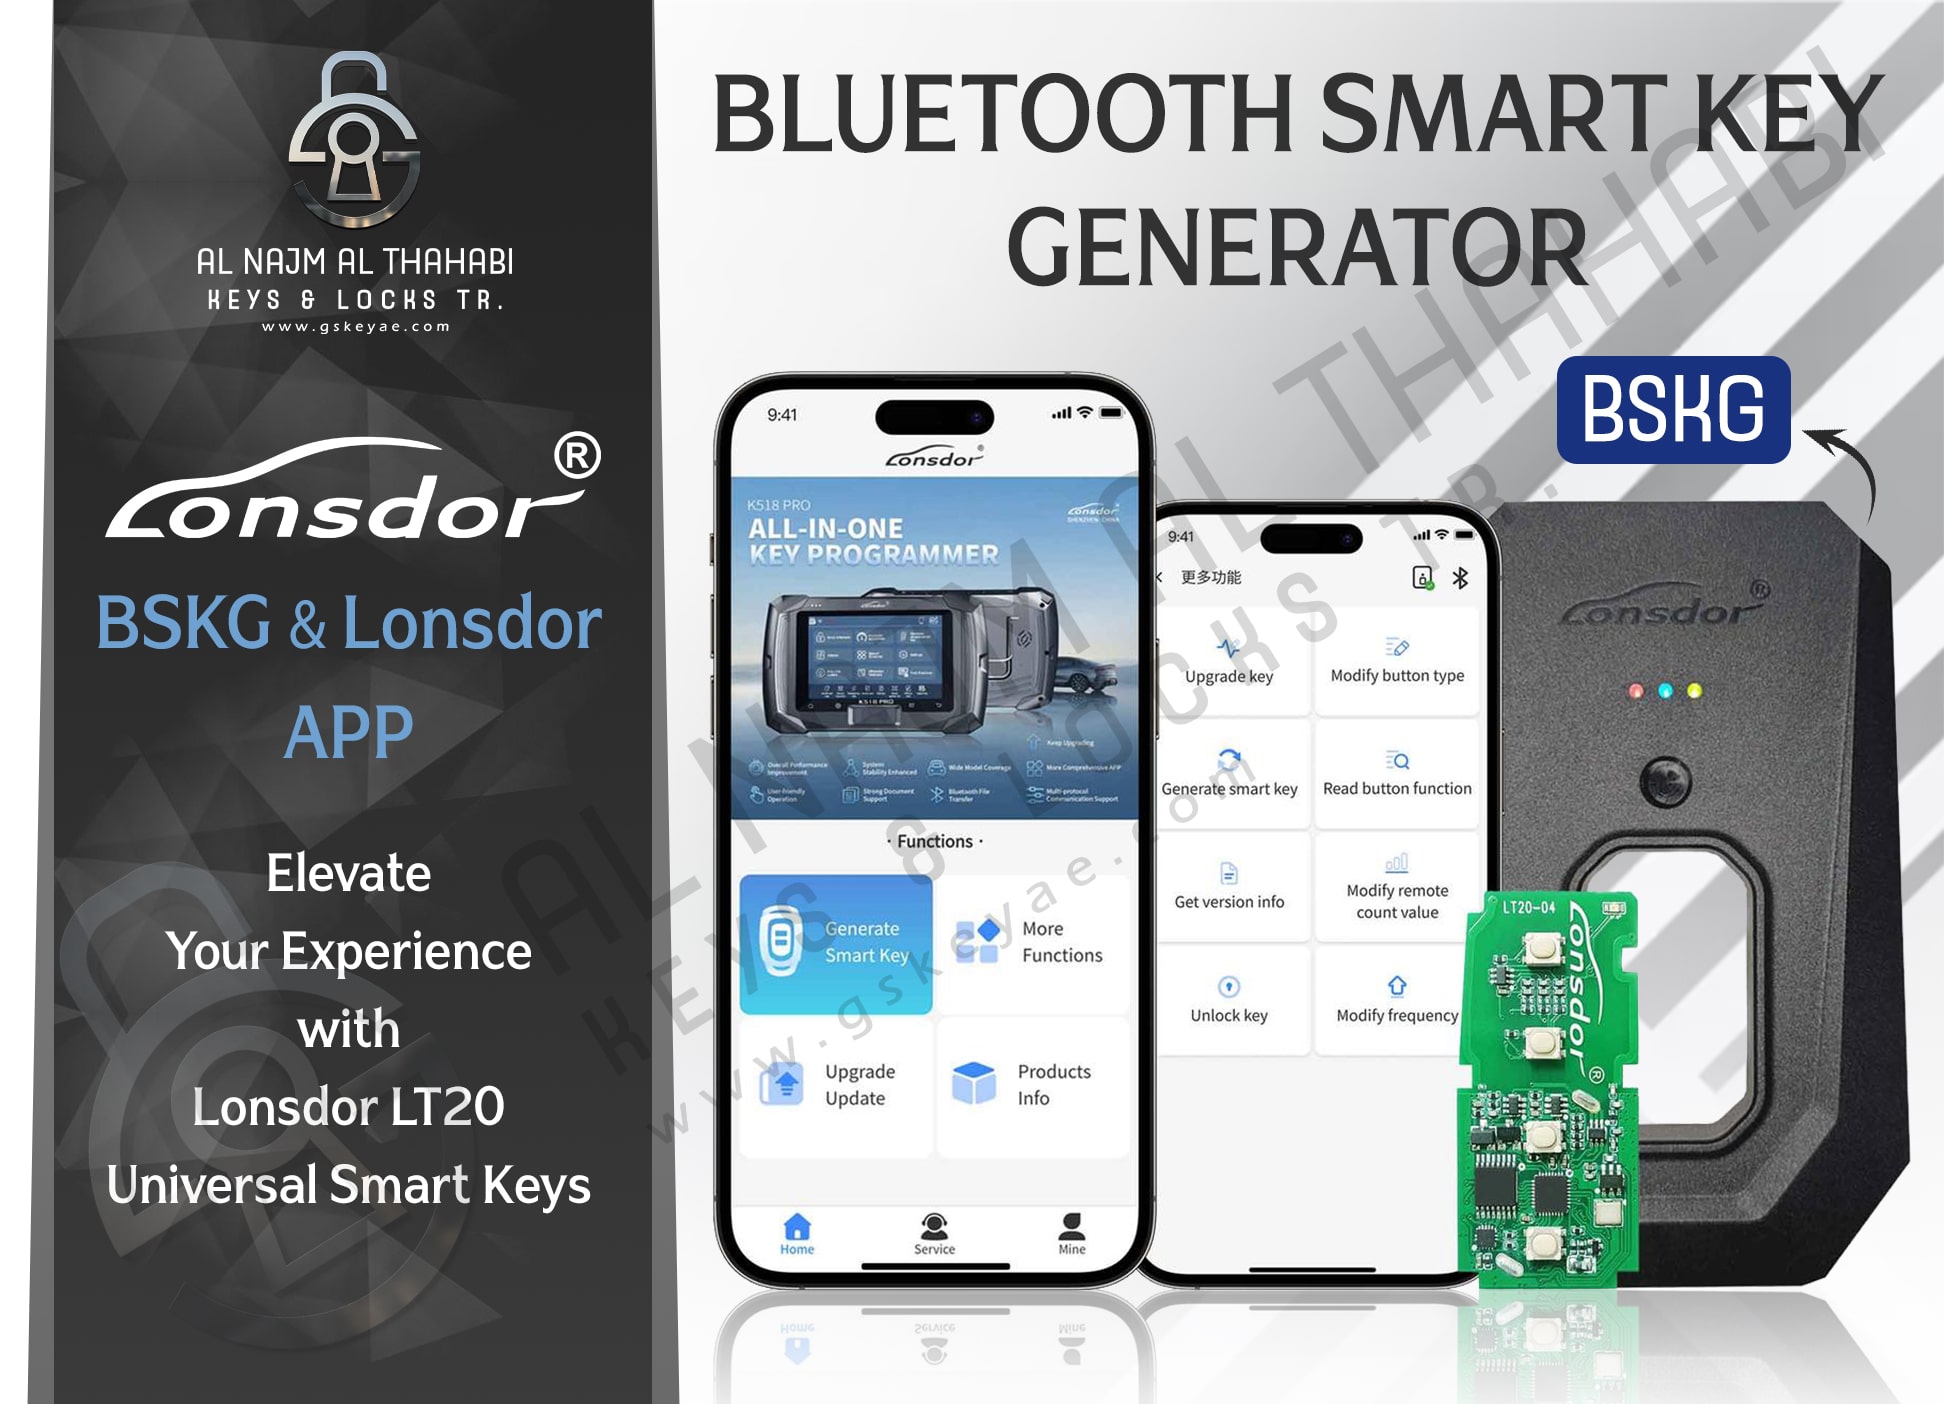 Lonsdor Bluetooth Smart Key Generator (BSKG)